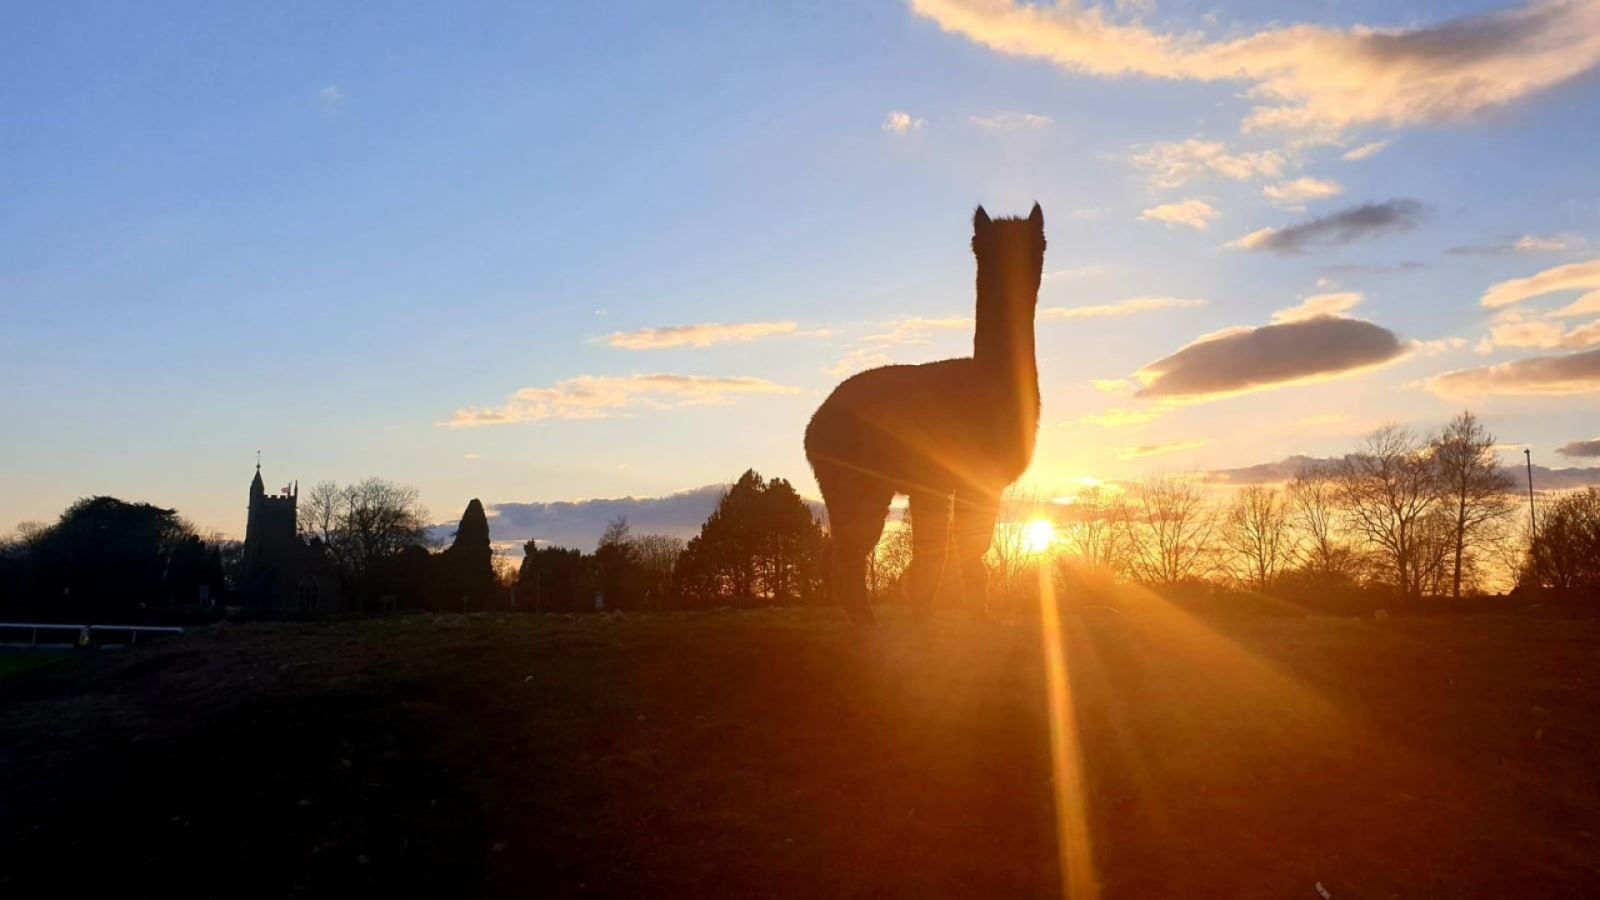 Alpaca stood on grass at sunset